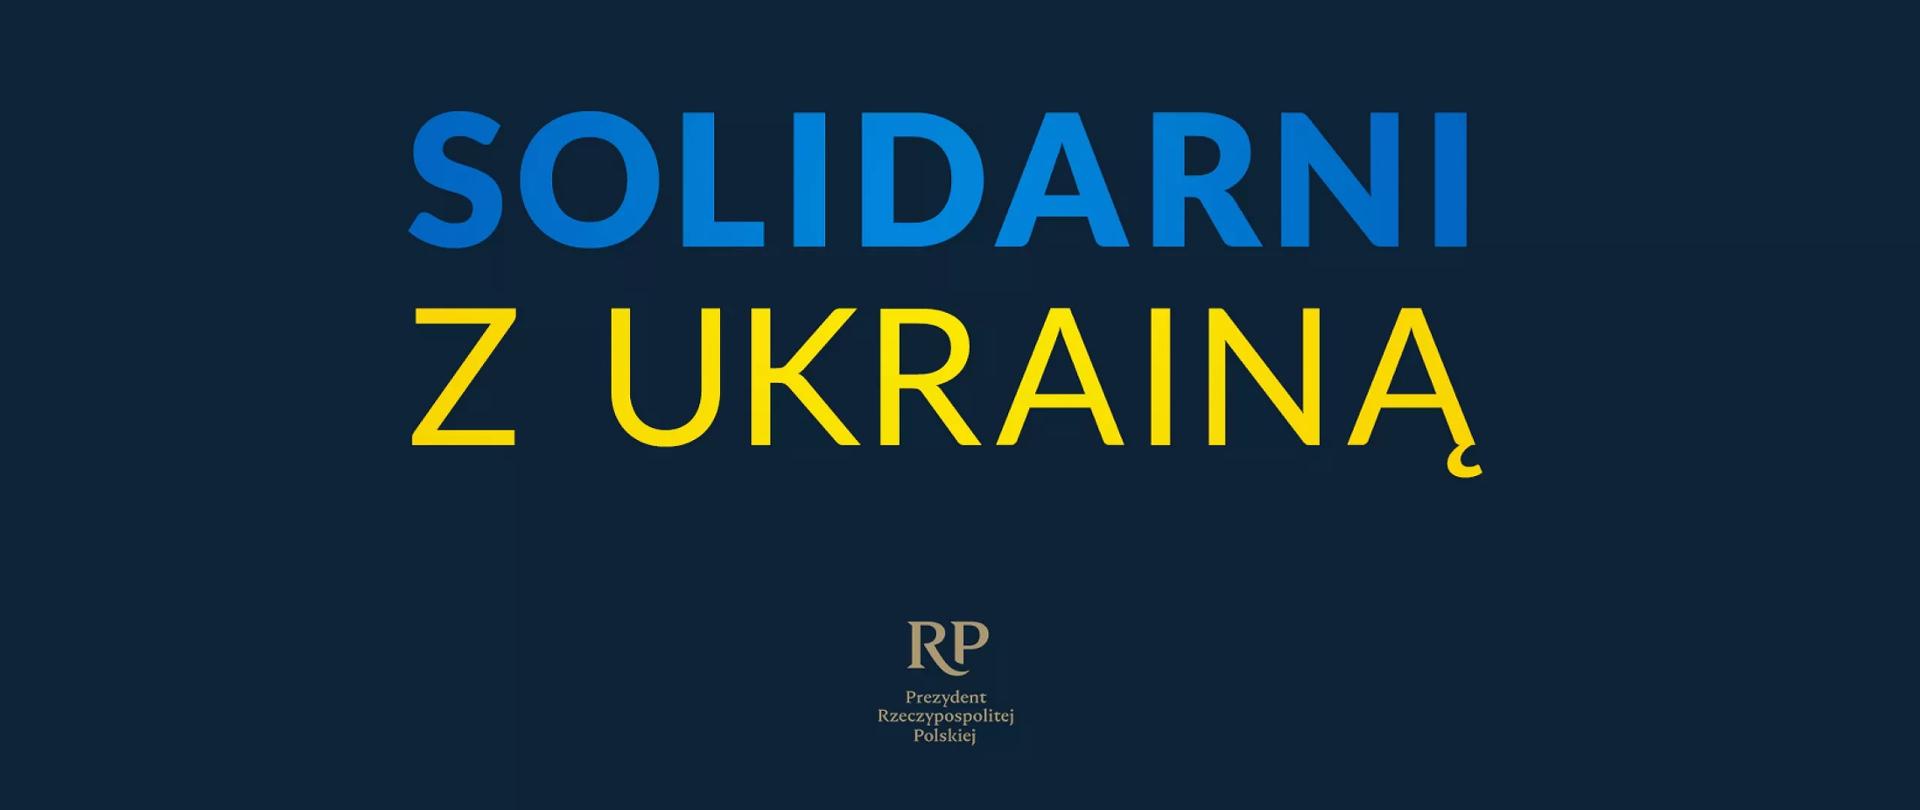 Solidarni z Ukrainą 